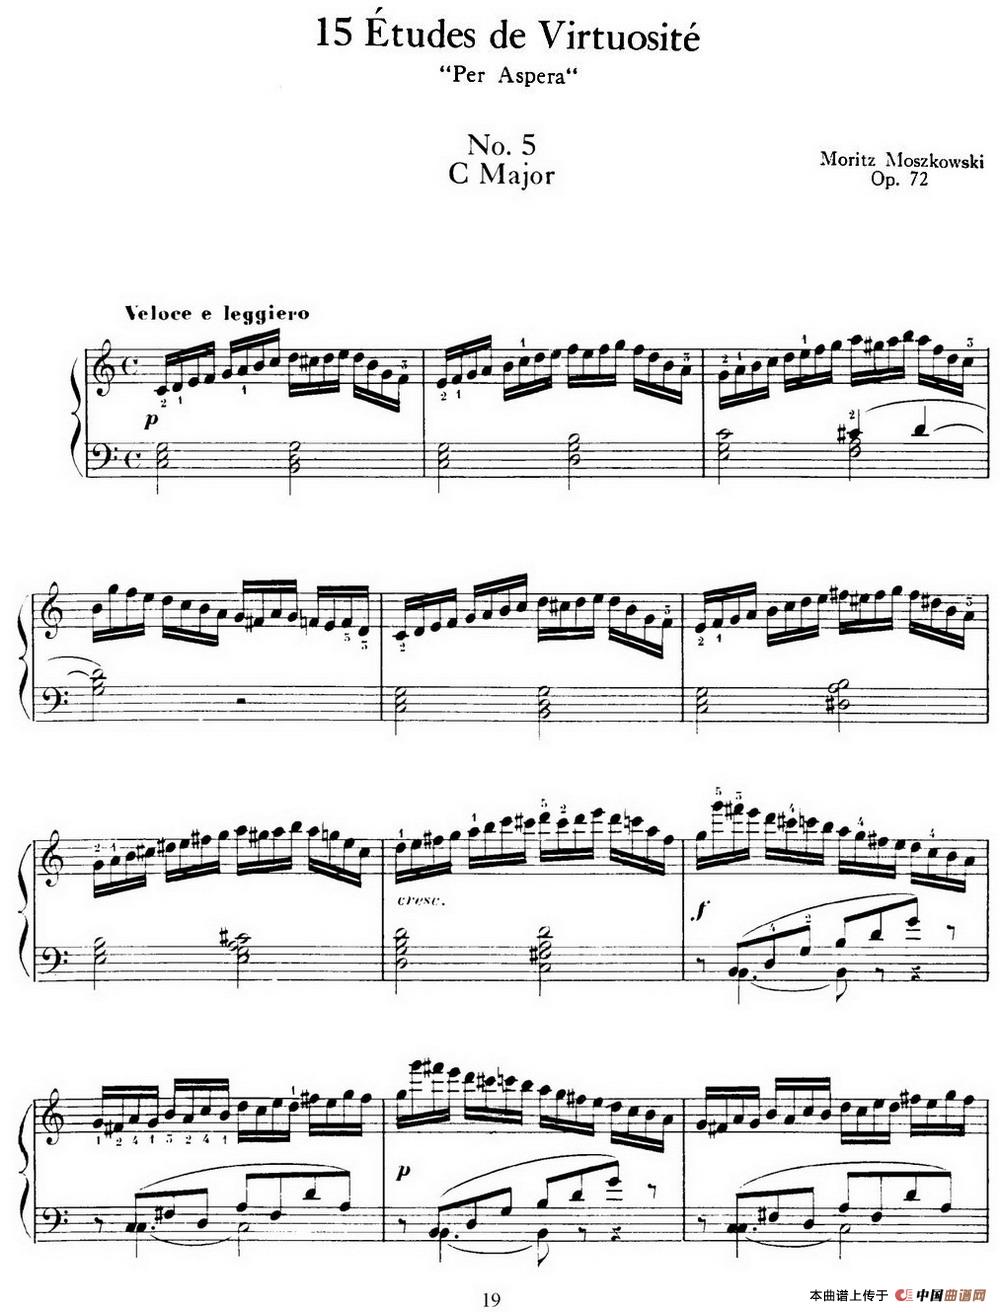 15 Etudes de Virtuosité Op.72 No.5（十五首钢琴练习曲之五）(1)_019-.jpg